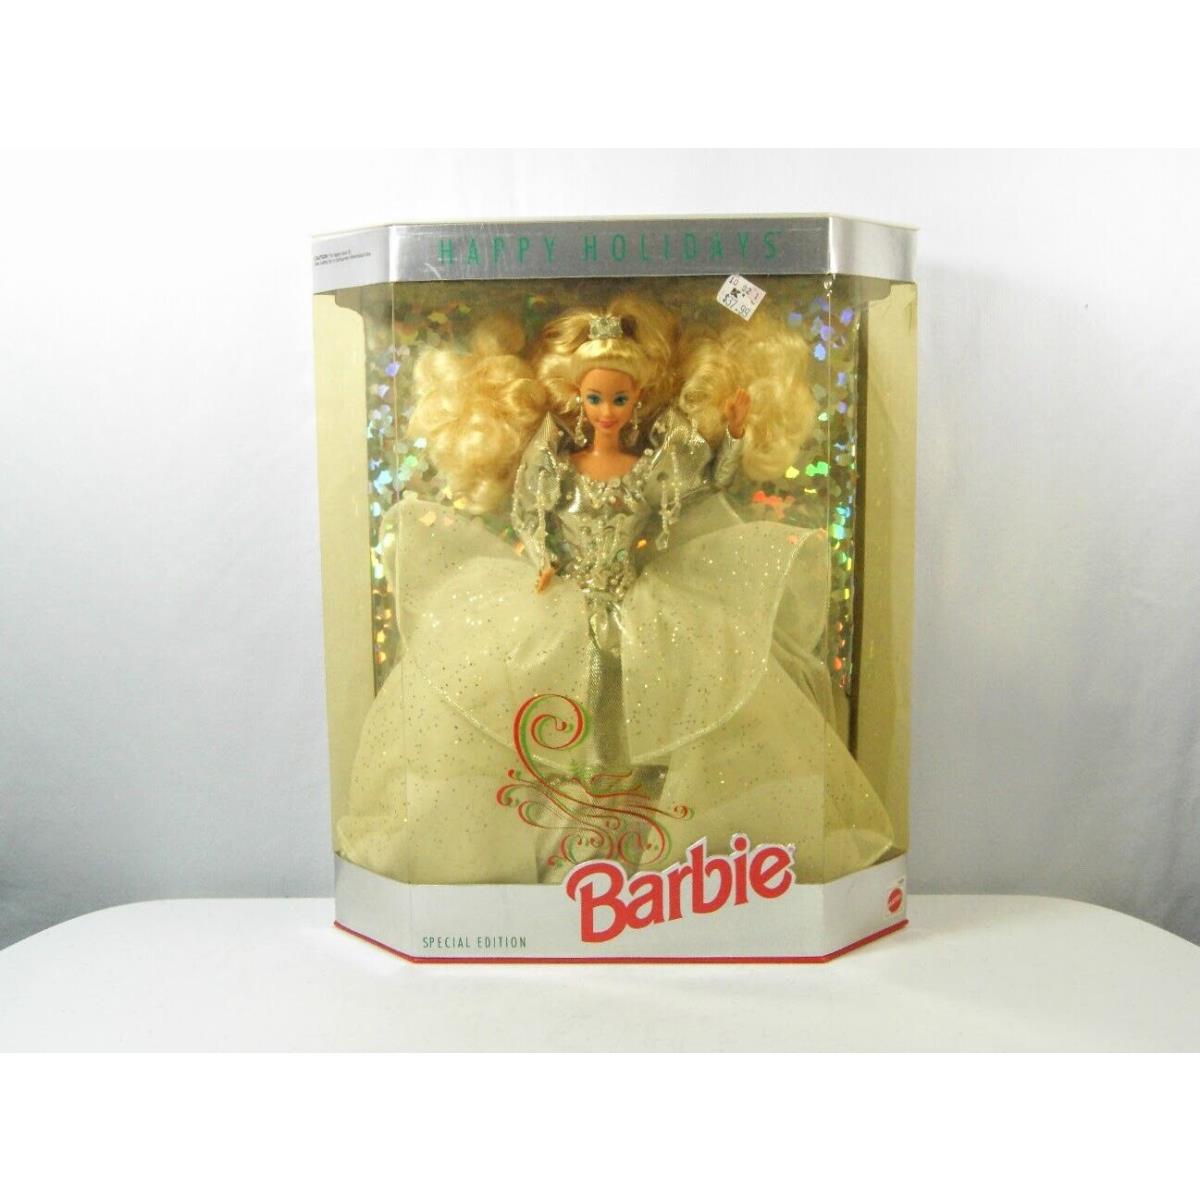 1992 Mattel Happy Holidays Christmas Barbie Doll Special Edition Nrfb